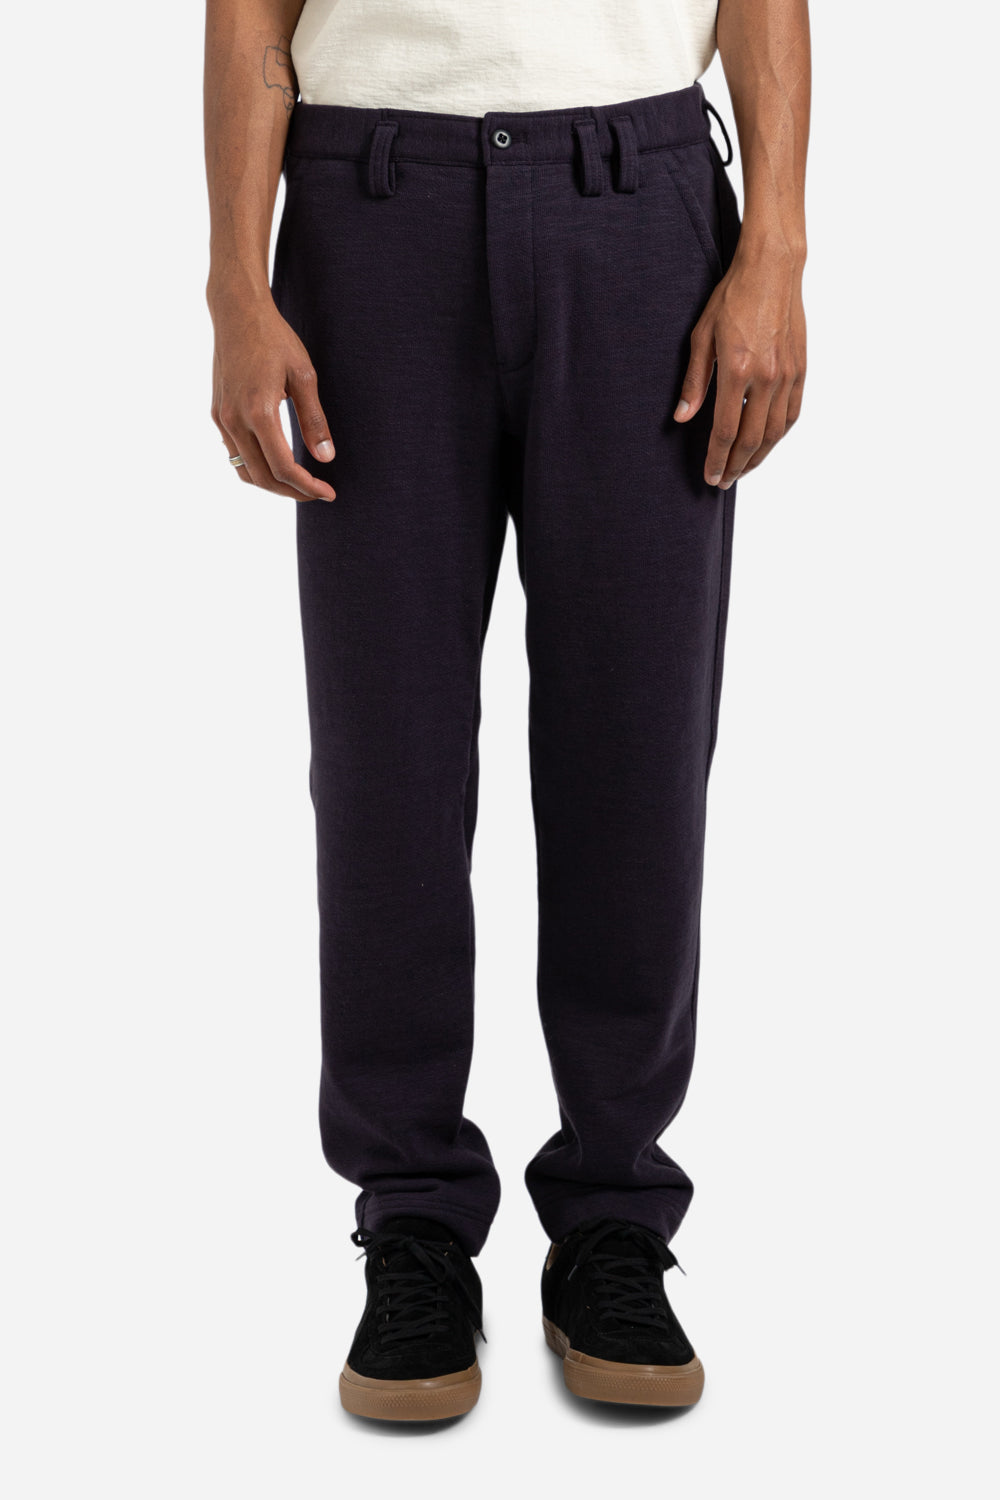 jackman-gg-sweat-trousers-dark-purple